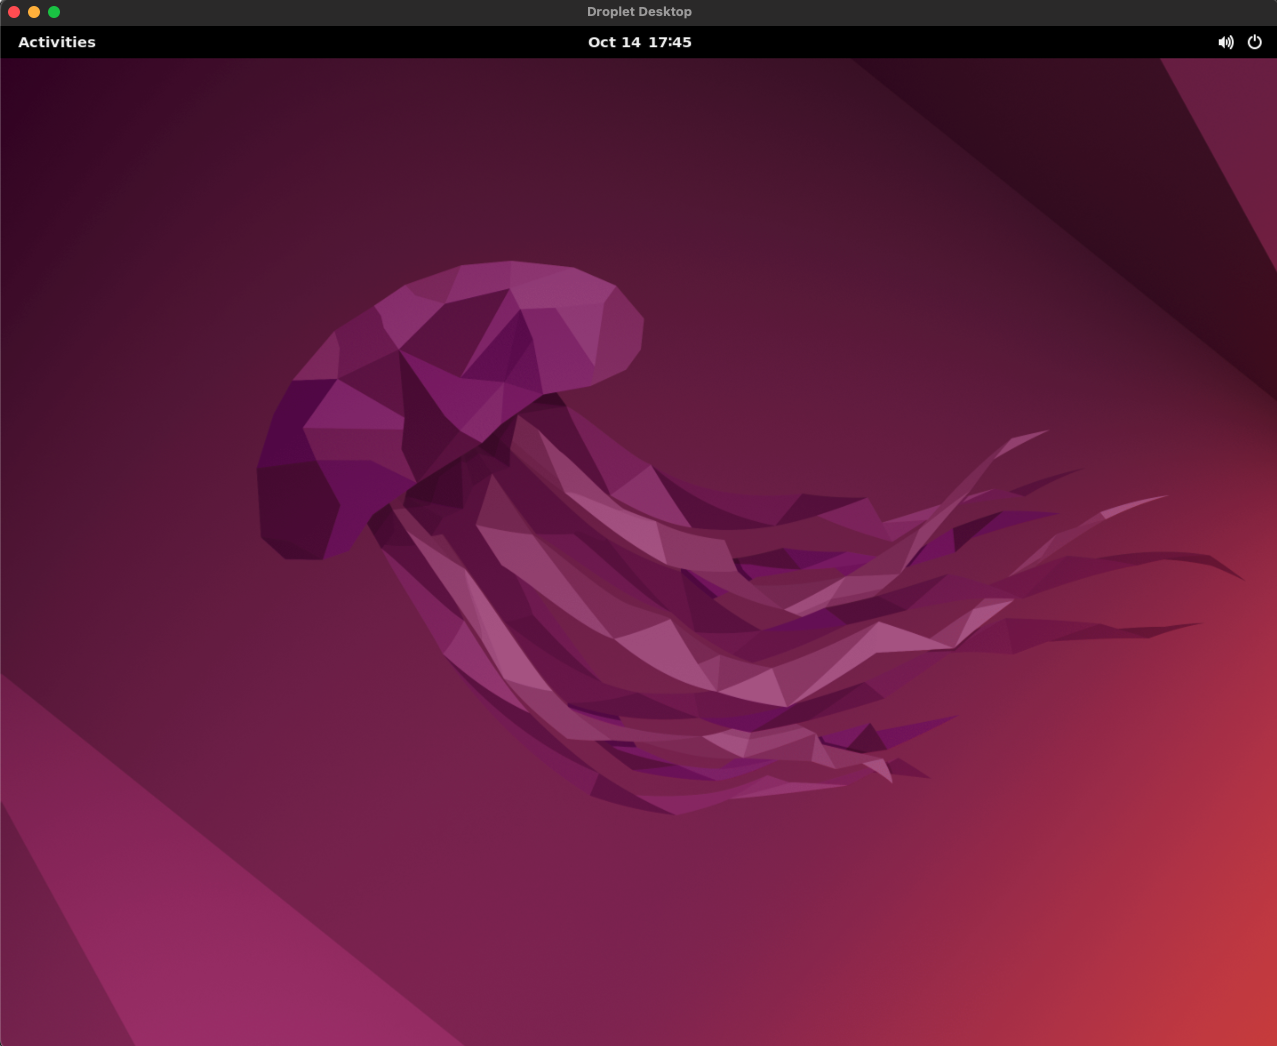 Droplet with Ubuntu Desktop running on it